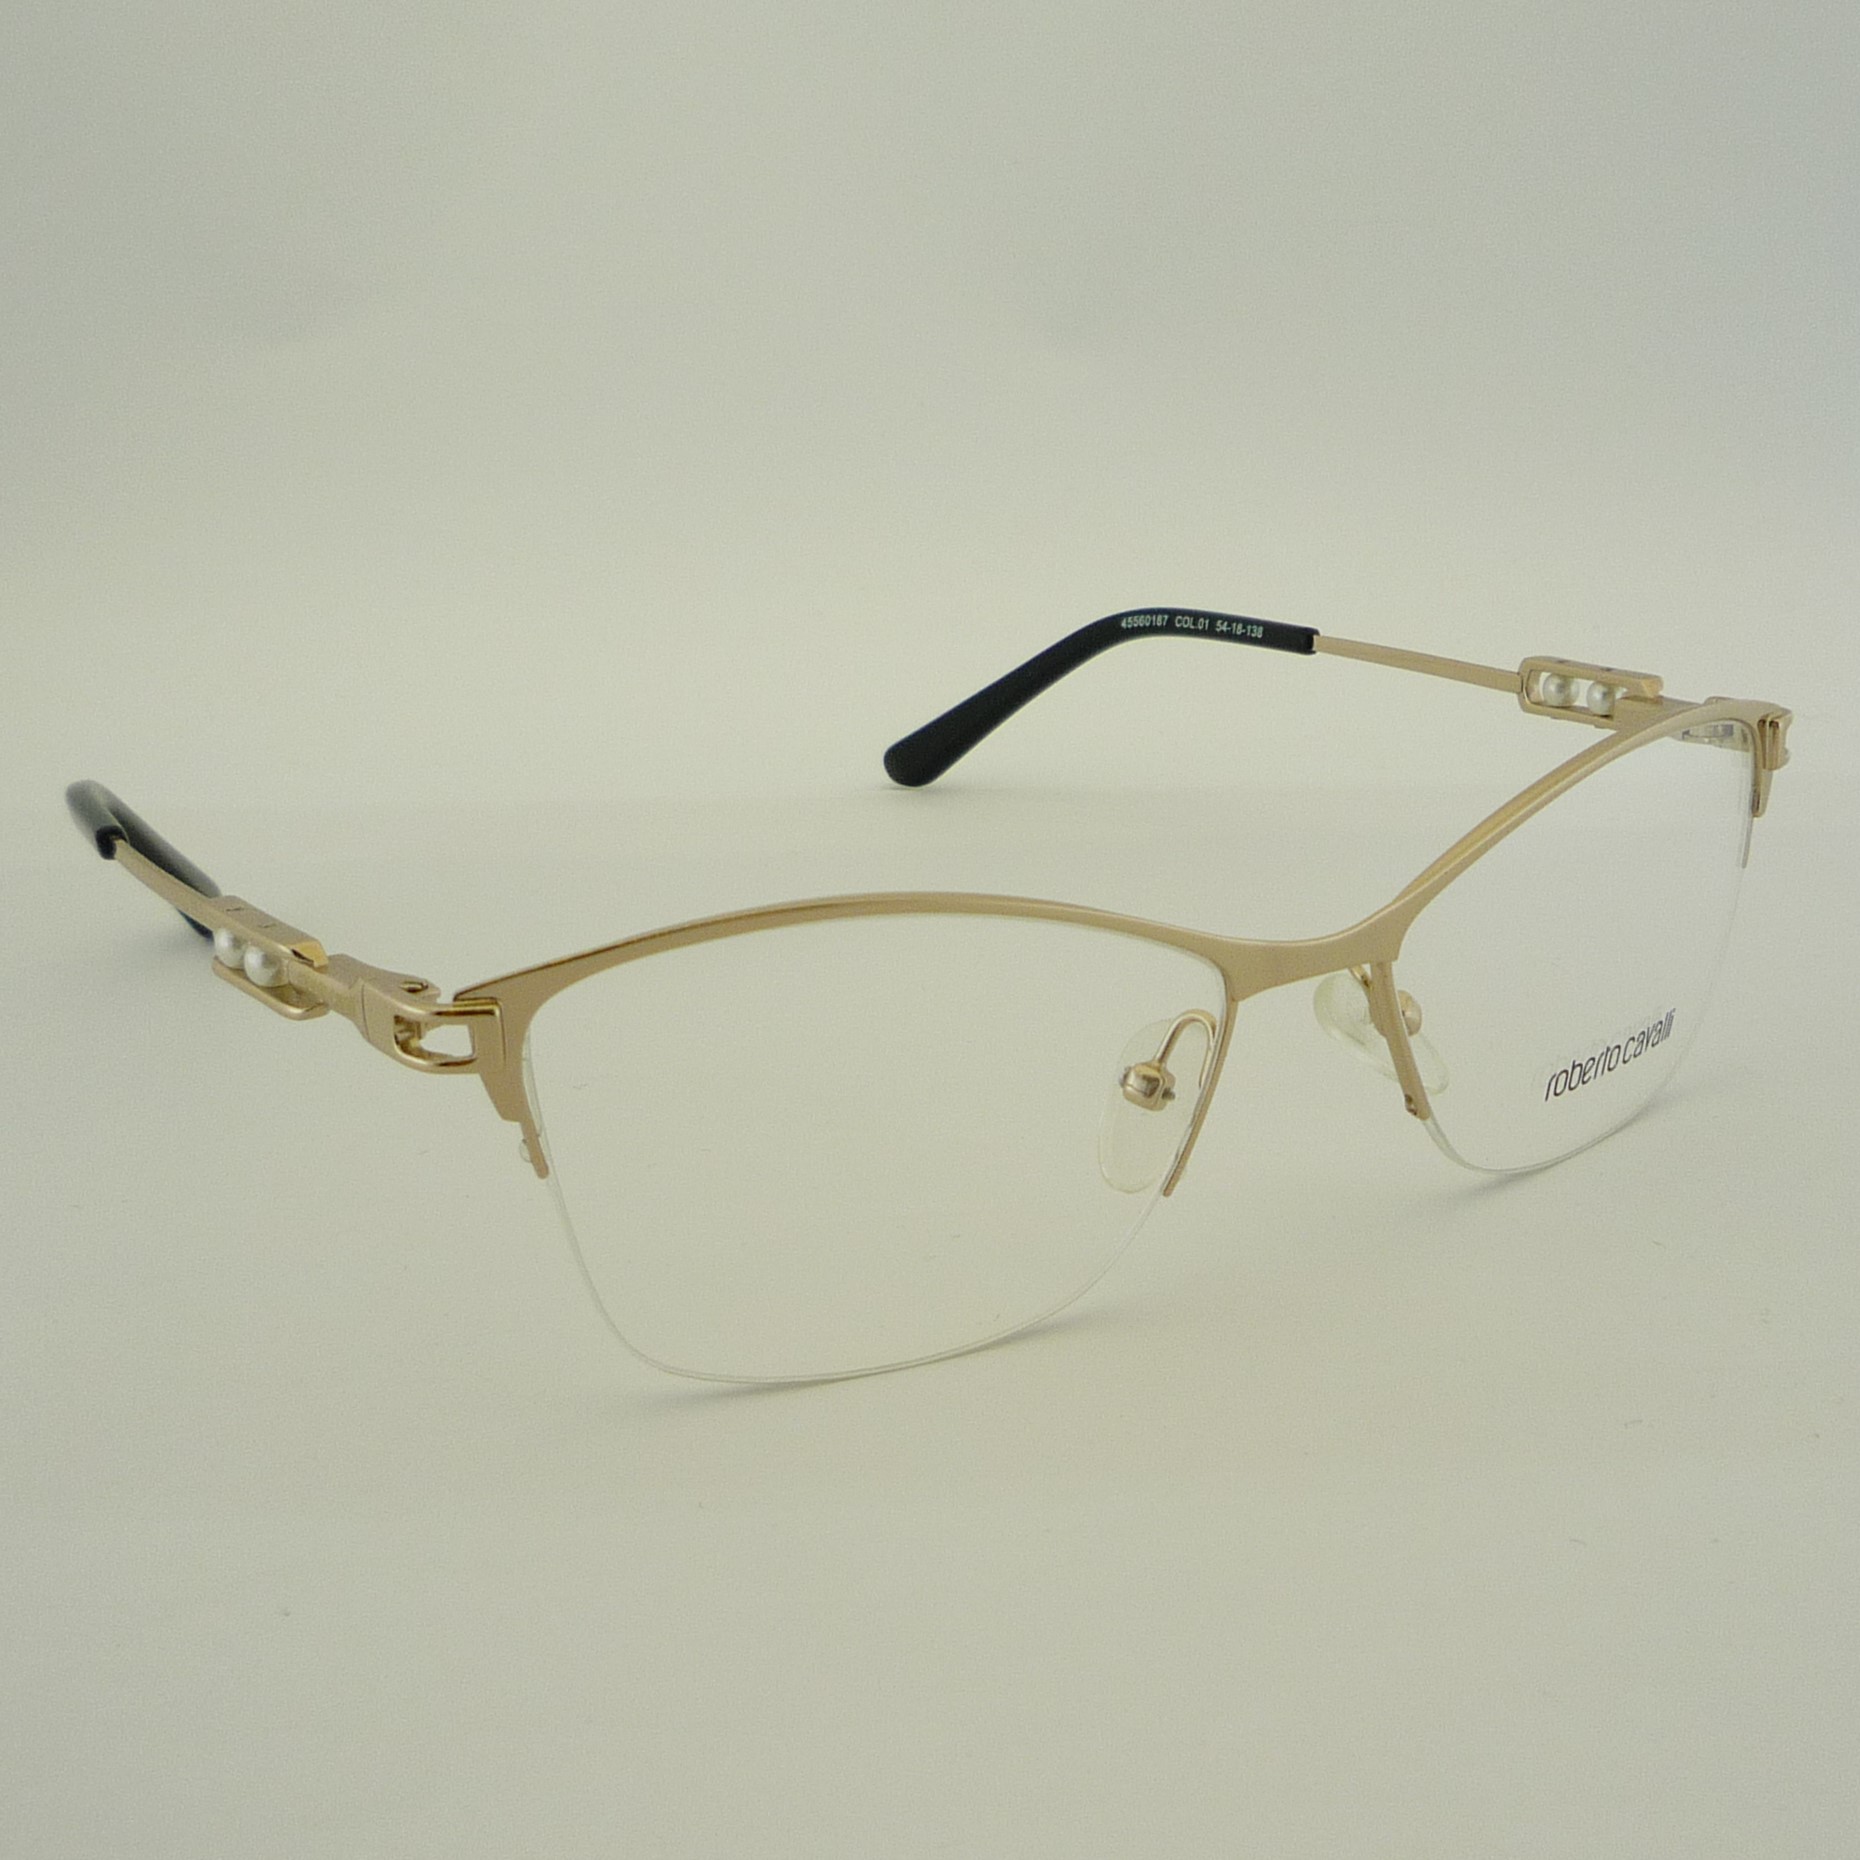 فریم عینک طبی زنانه روبرتو کاوالی مدل 45560187C1 -  - 5